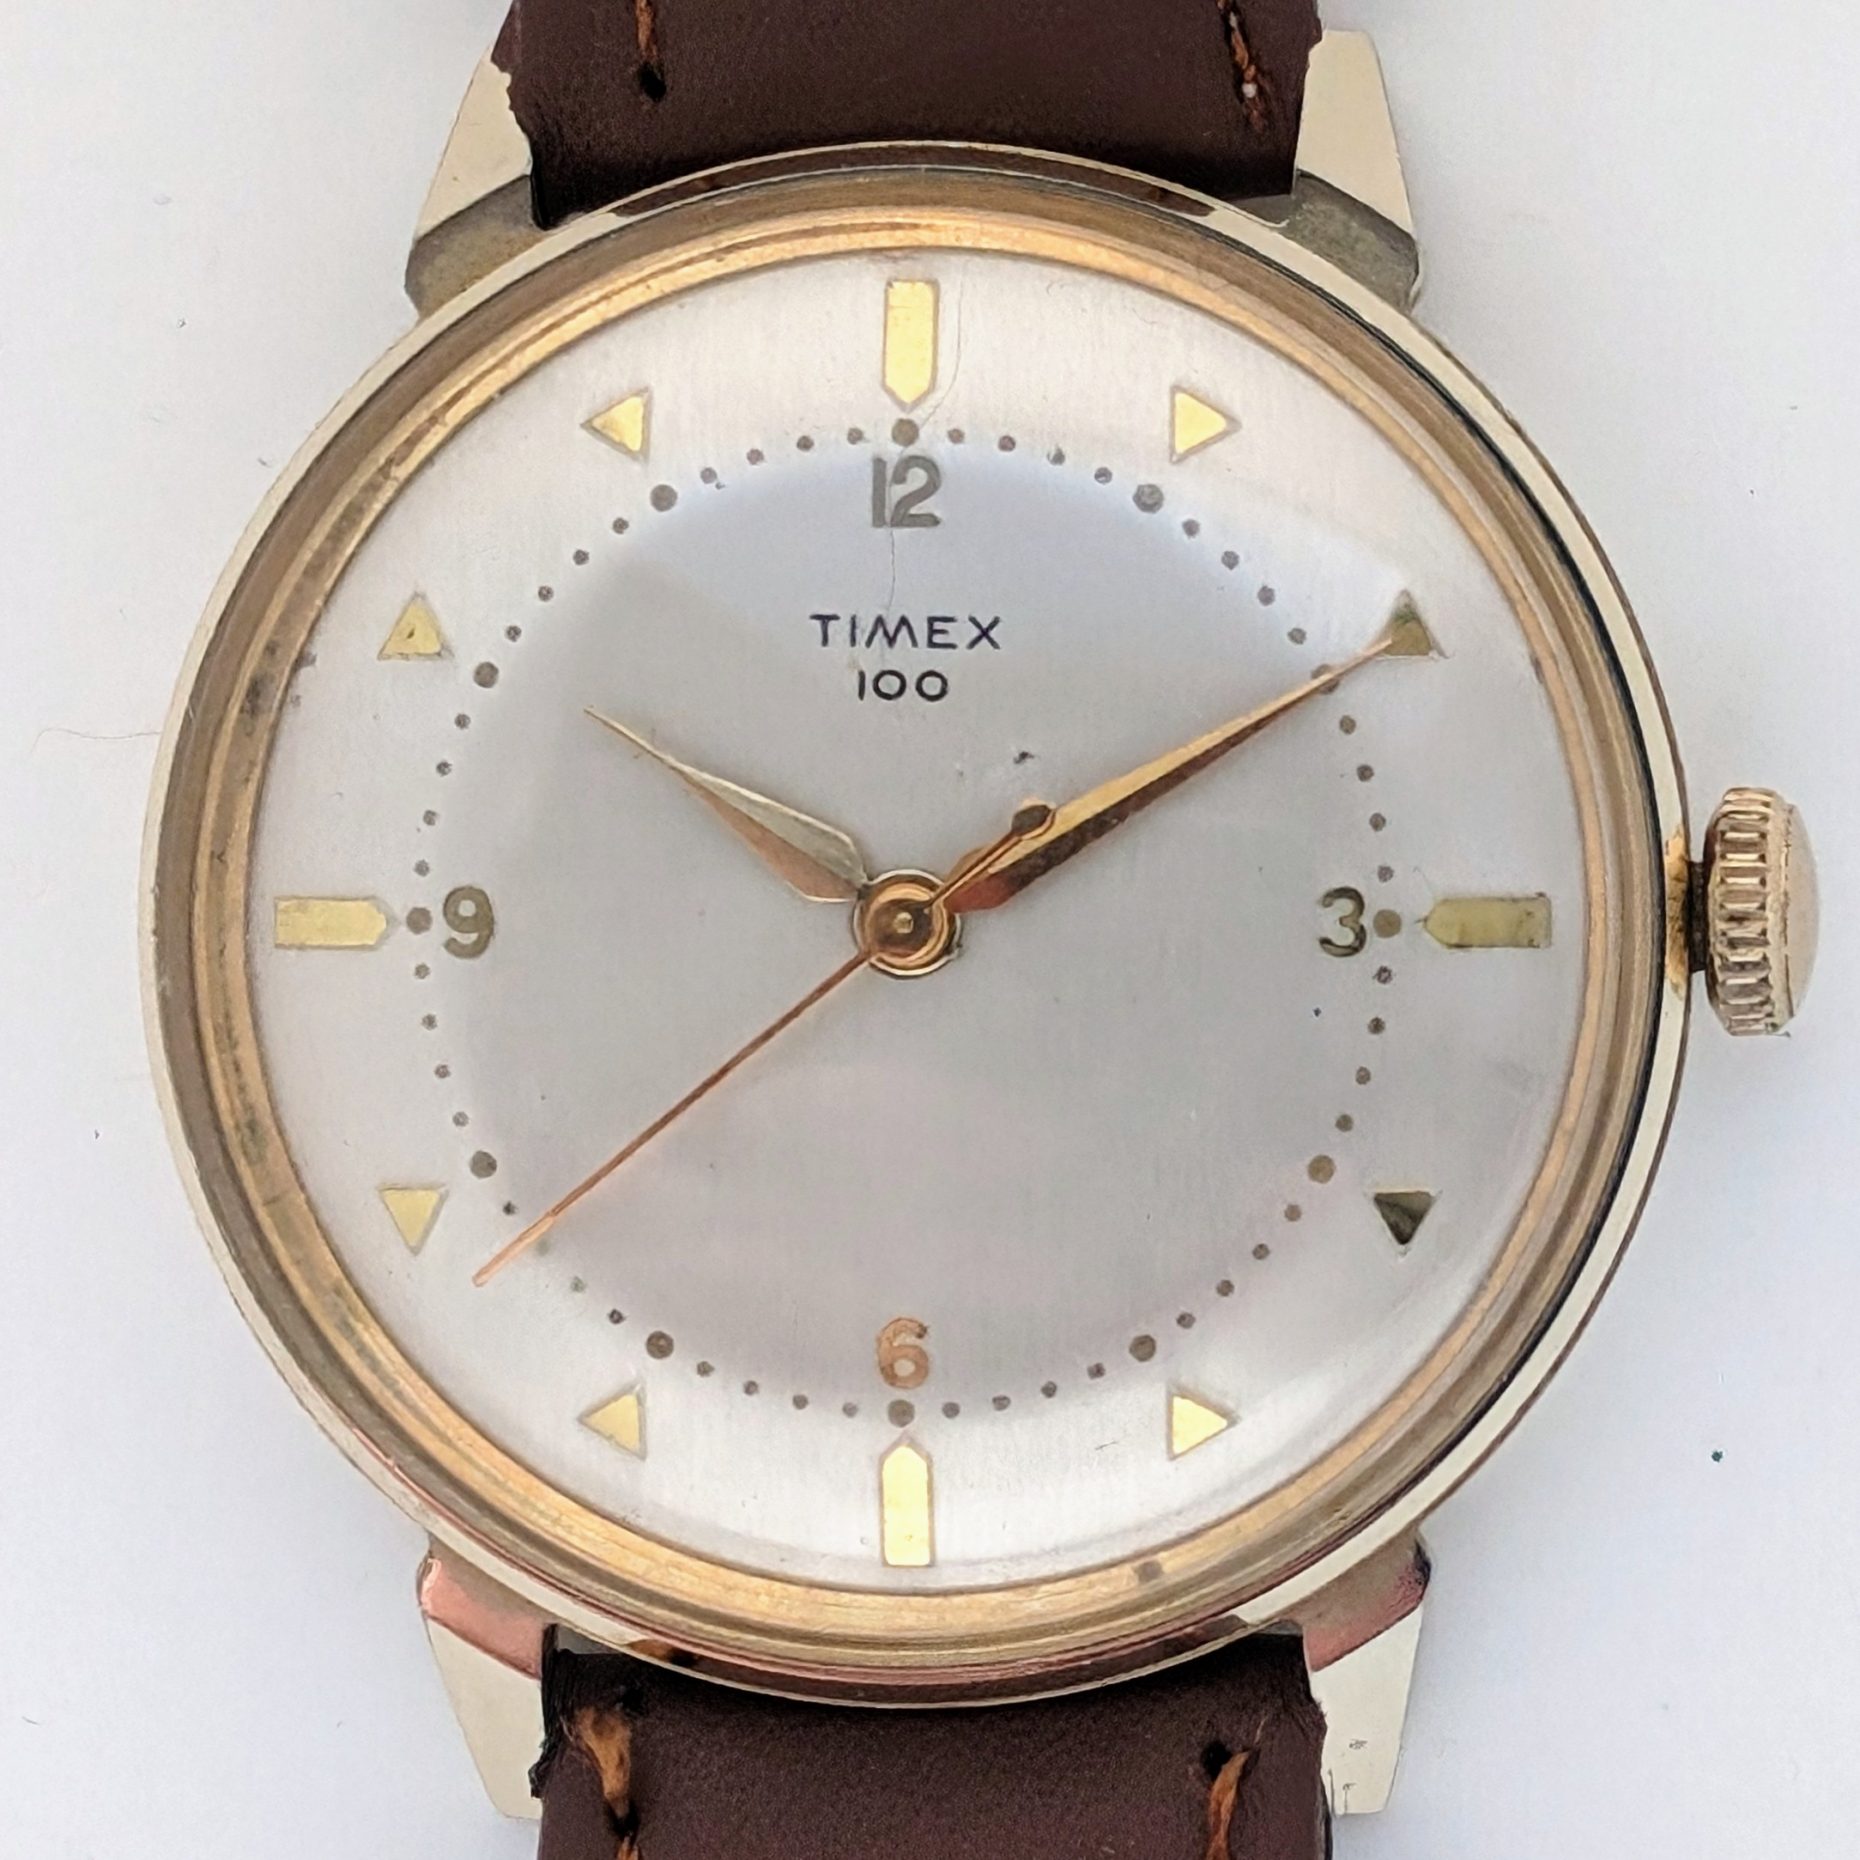 Timex 100 1959 Ref. 2084 2259